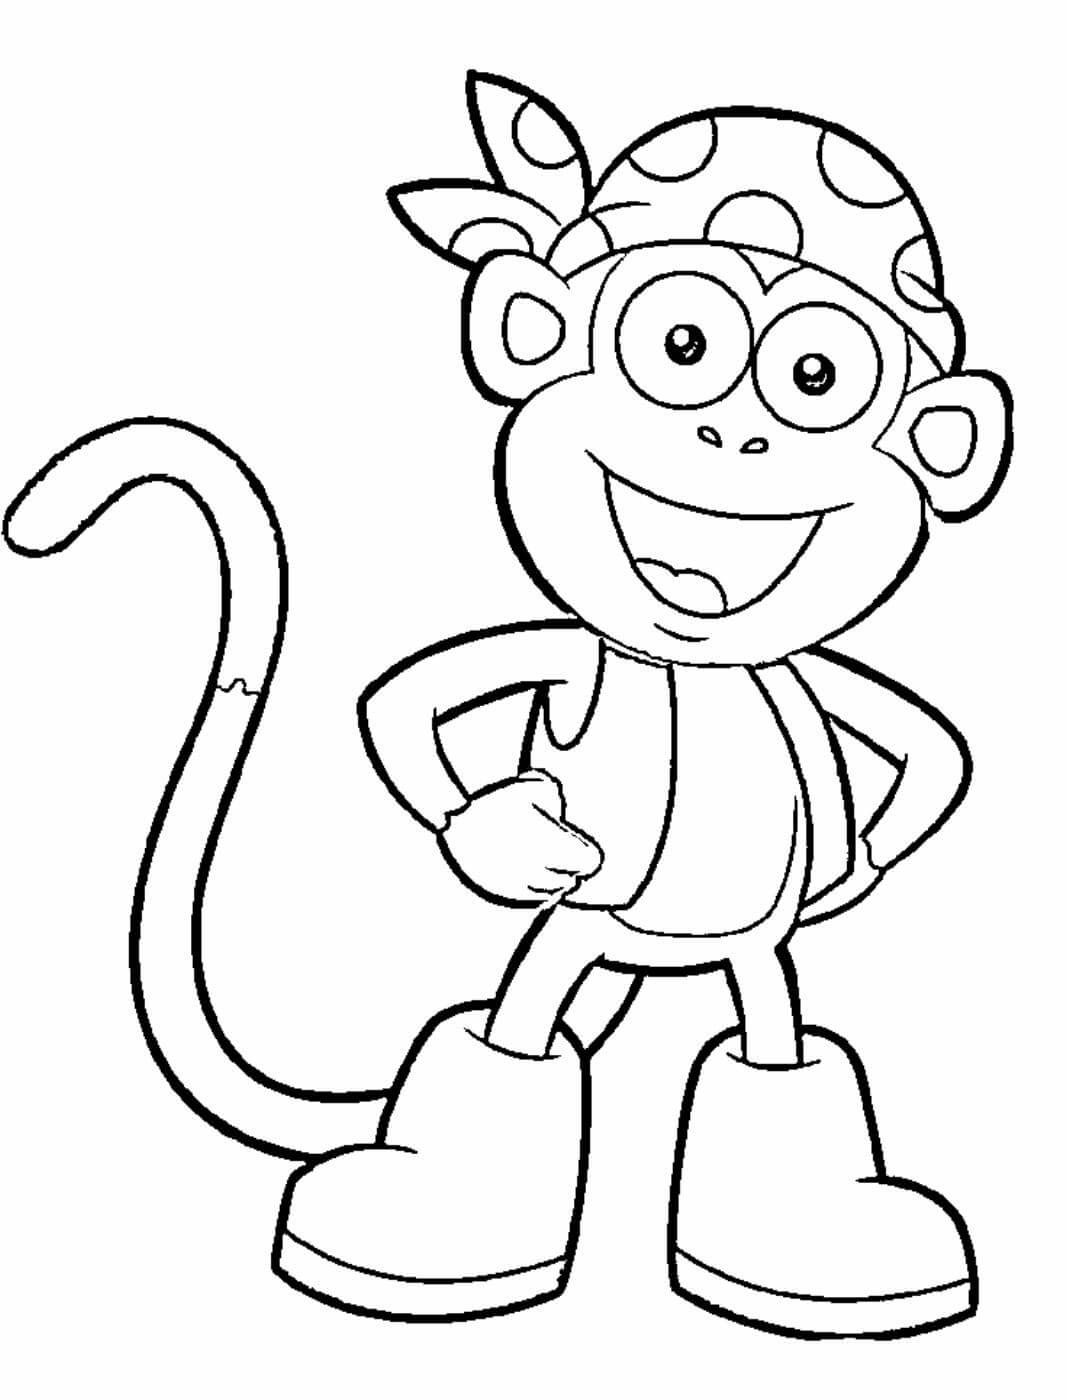 Macaco Divertido De Botas para colorir